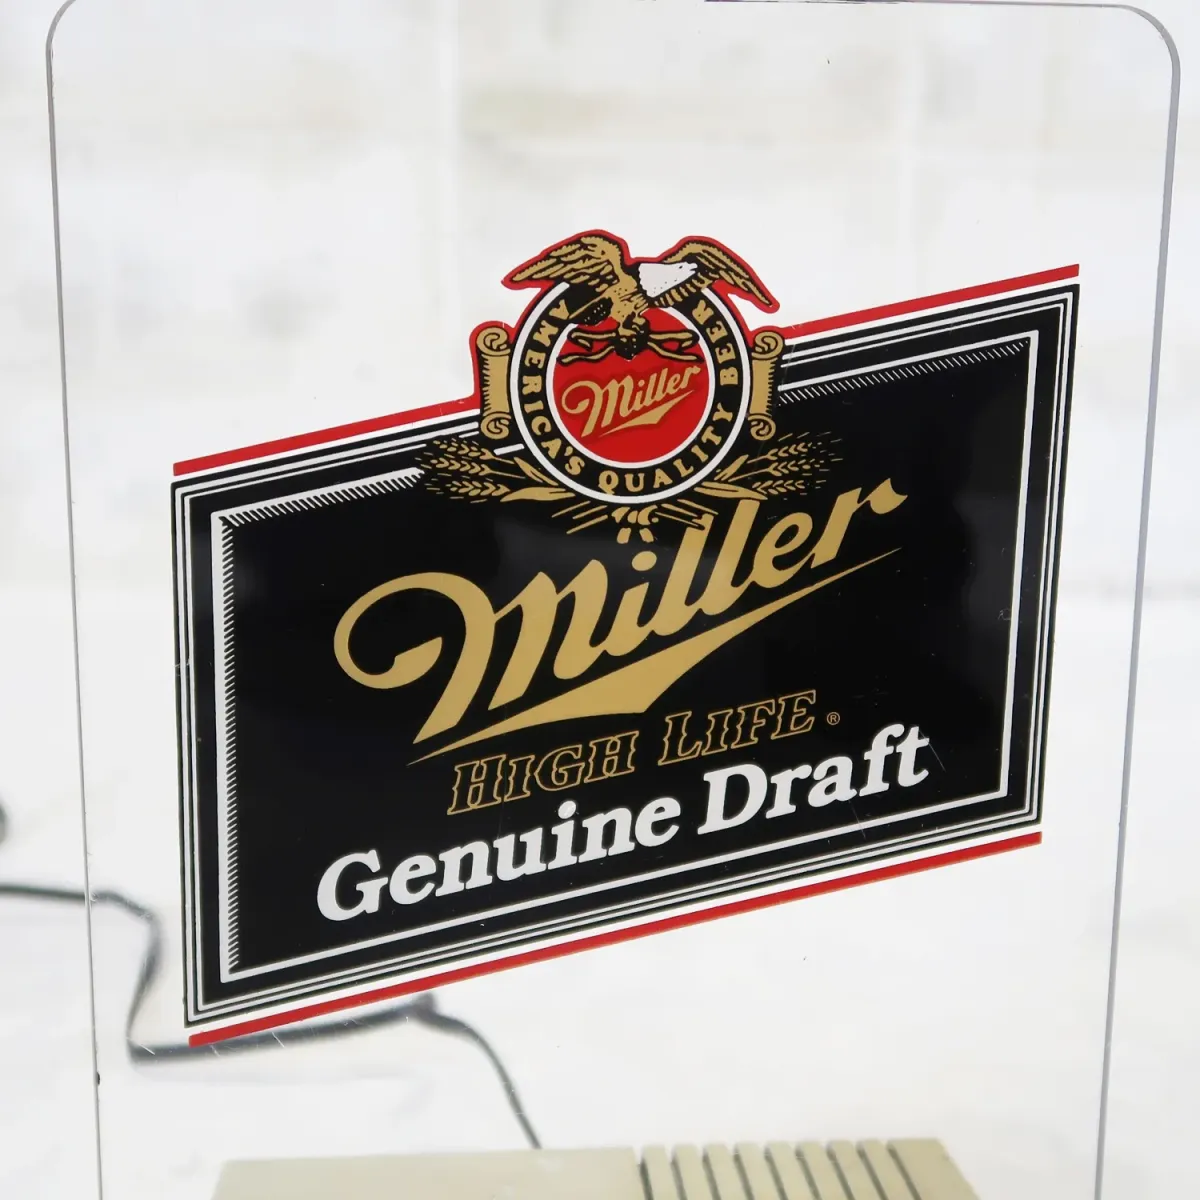 Miller Beer ビンテージ ライトサイン